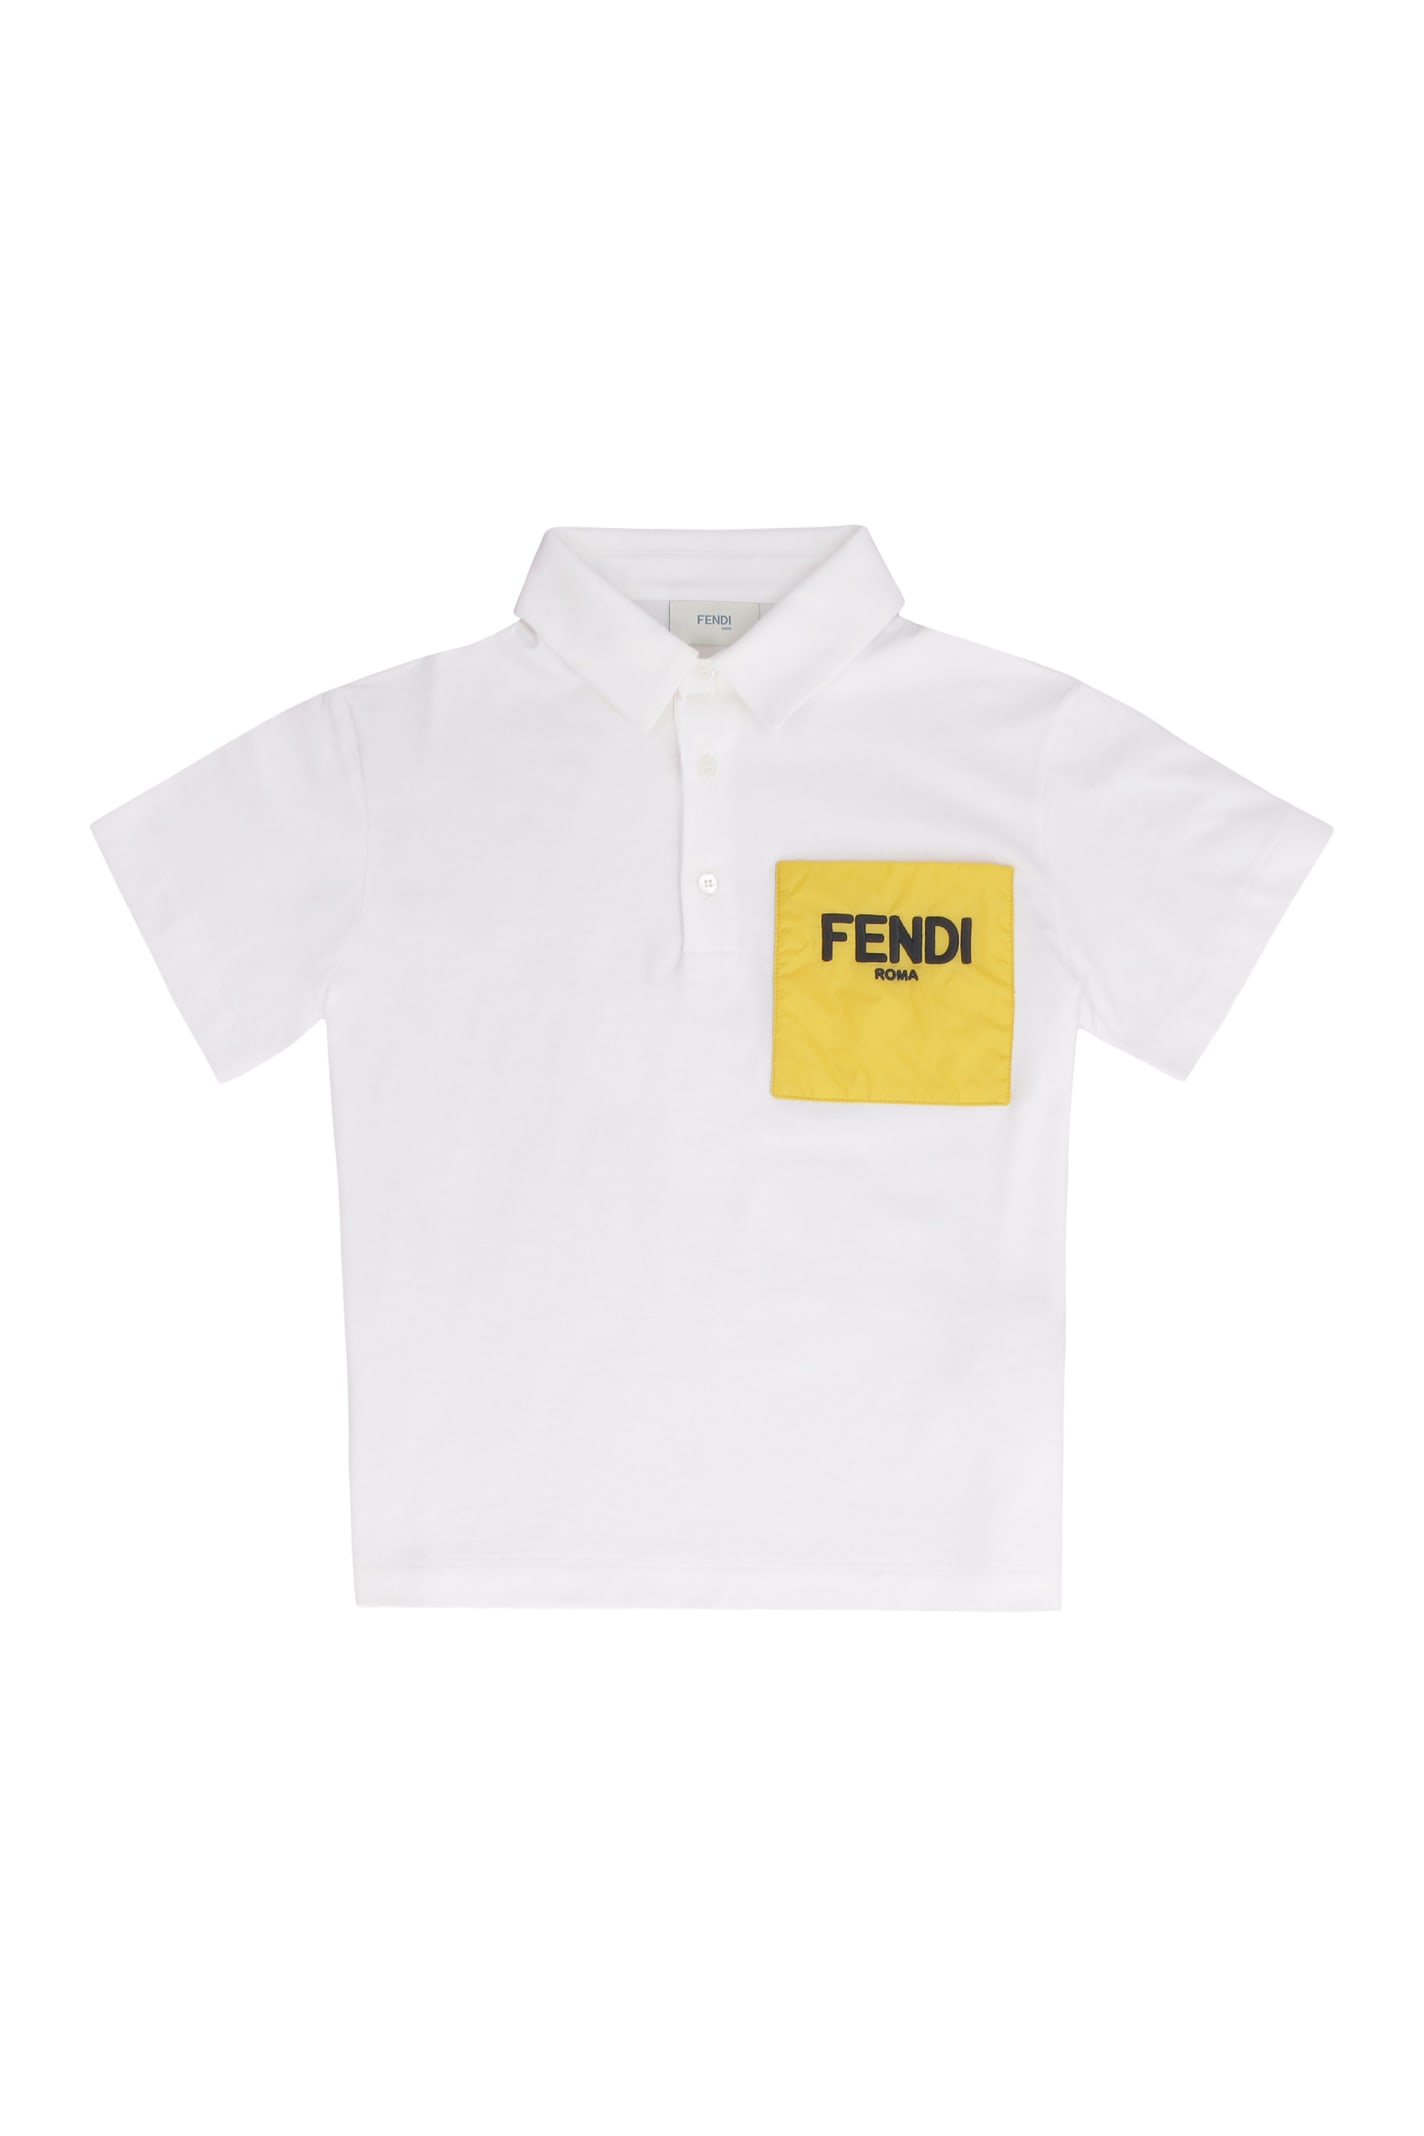 Fendi Chest-pocket Cotton Polo Shirt